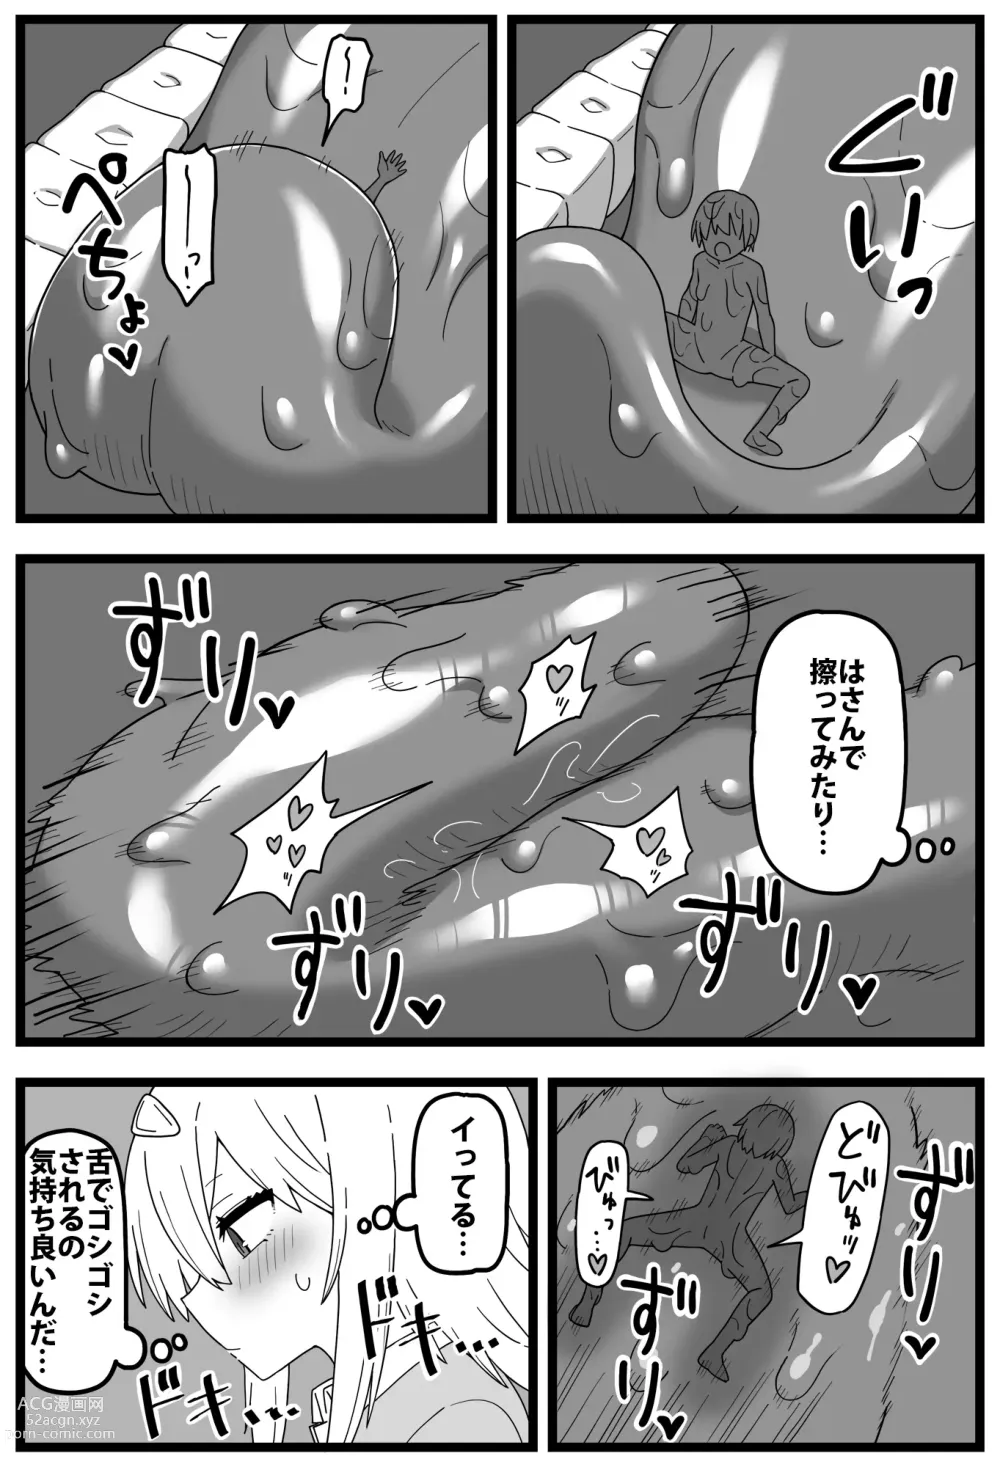 Page 16 of doujinshi Doushitemo Onnanoko ni Taberaretai Manga